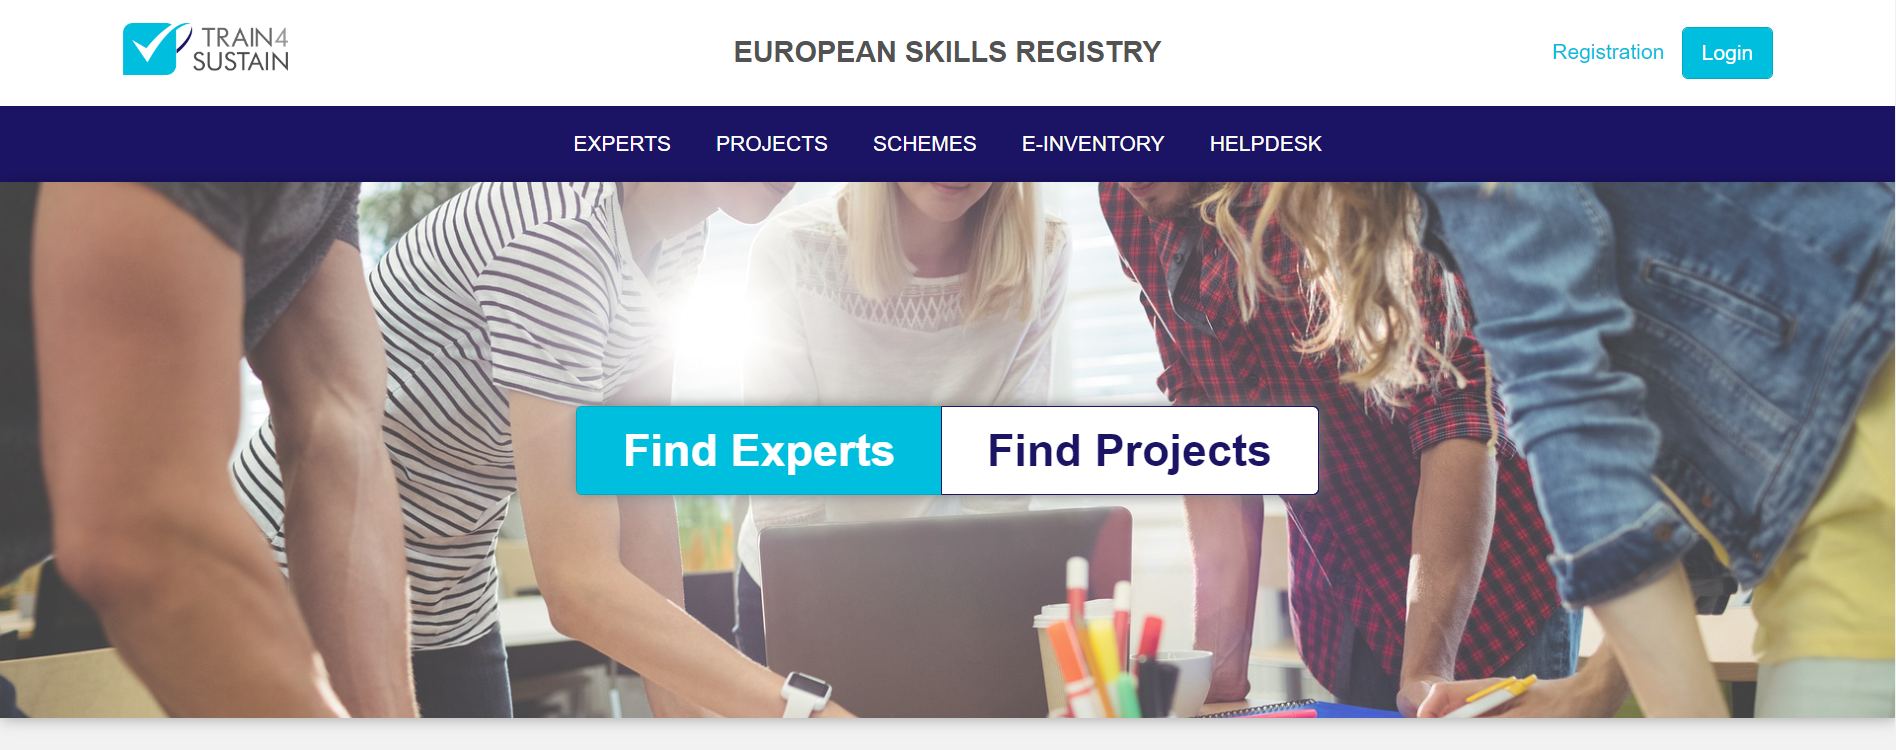 The European Skills Registry Platform in online!